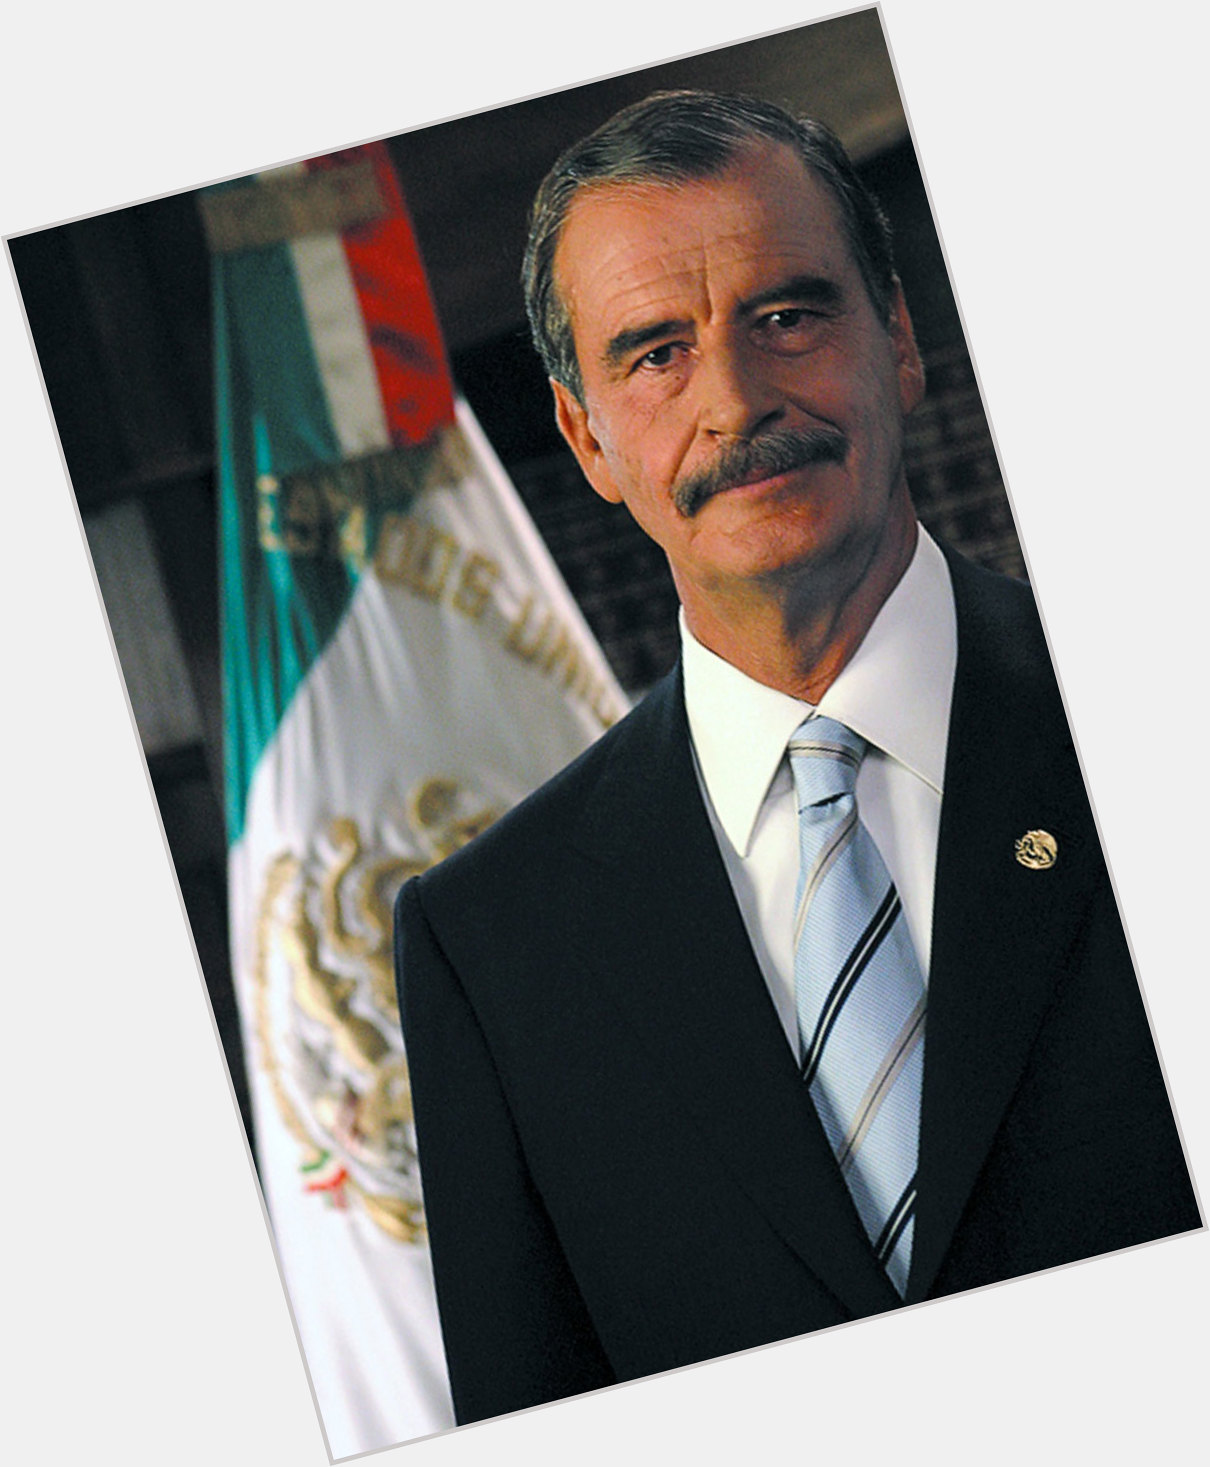 <a href="/hot-men/vicente-fox/where-dating-news-photos">Vicente Fox</a>  